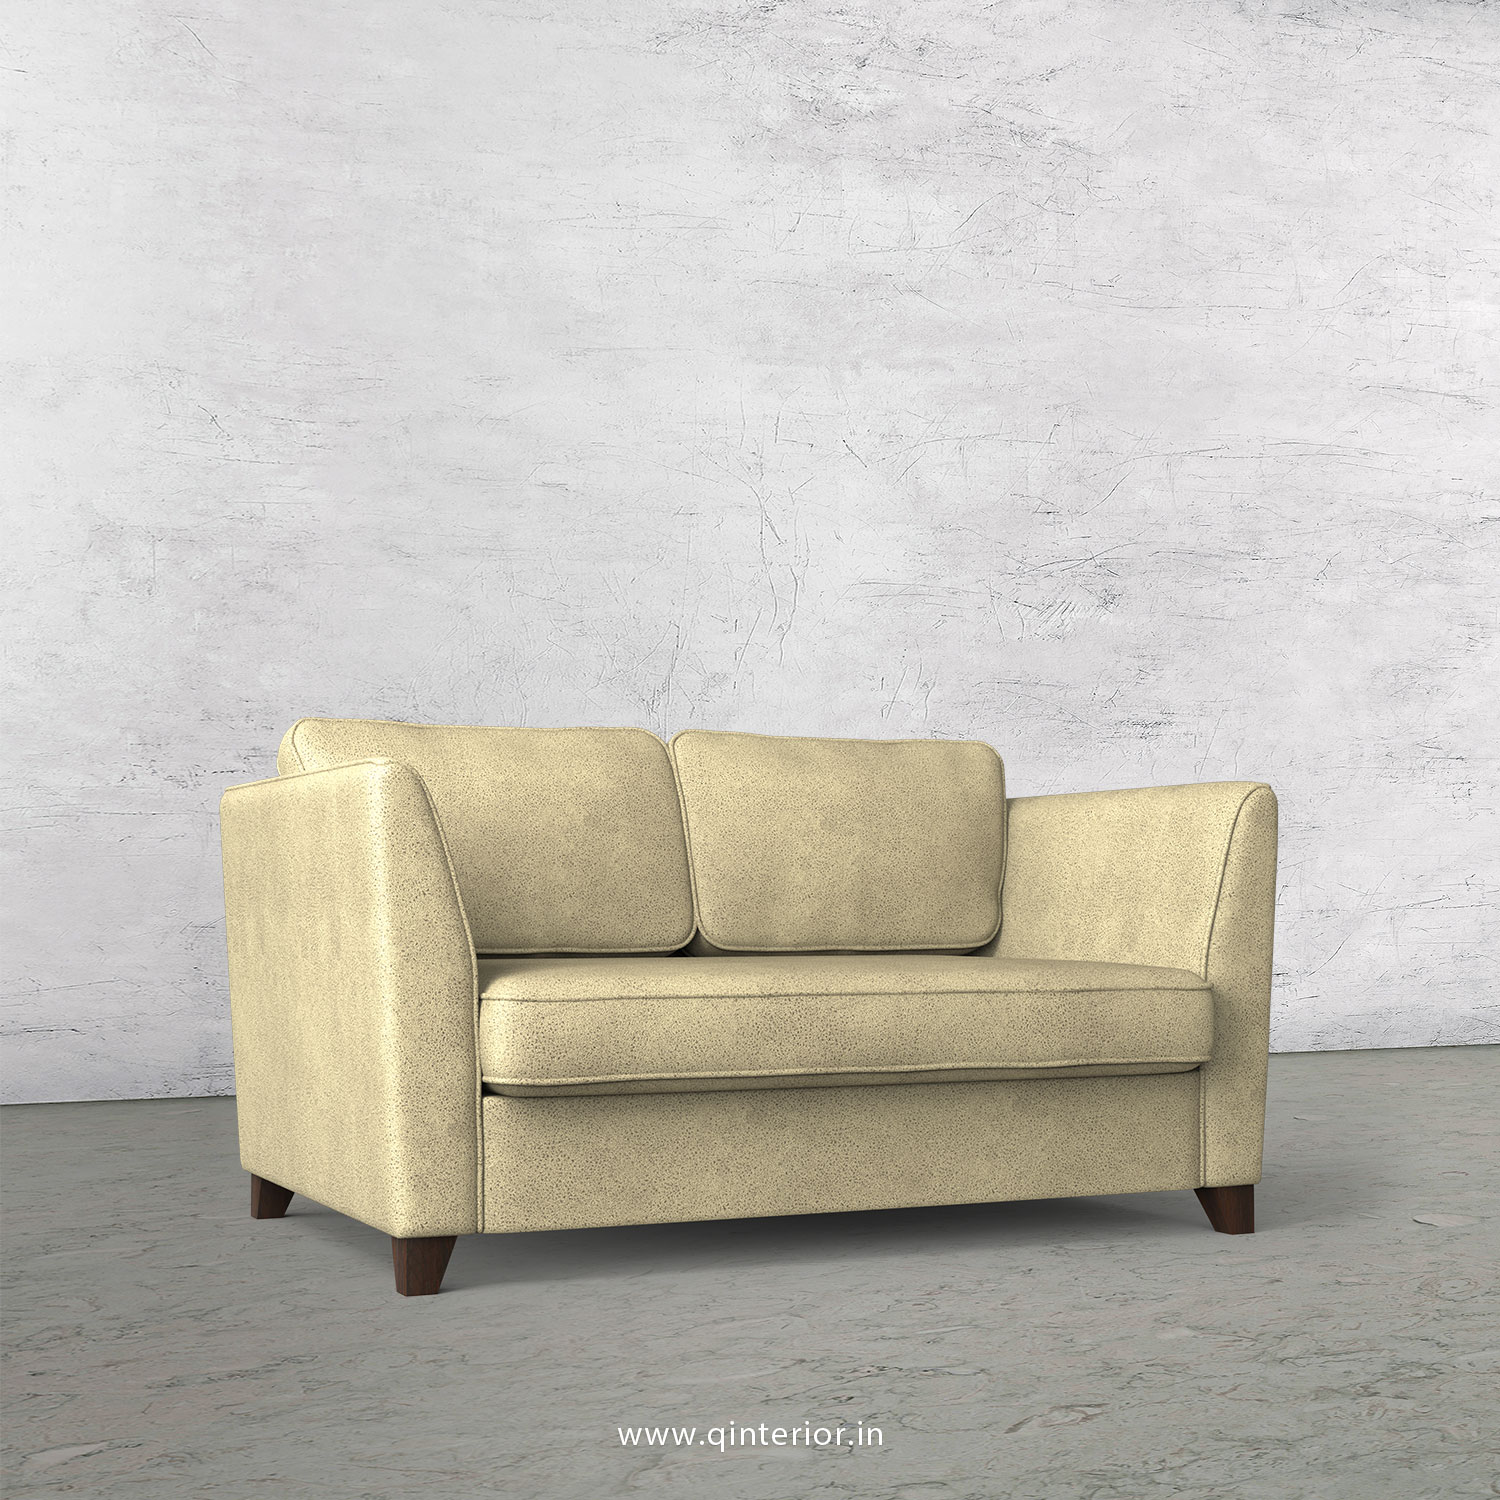 Kingstone 2 Seater Sofa in Fab Leather Fabric - SFA004 FL10